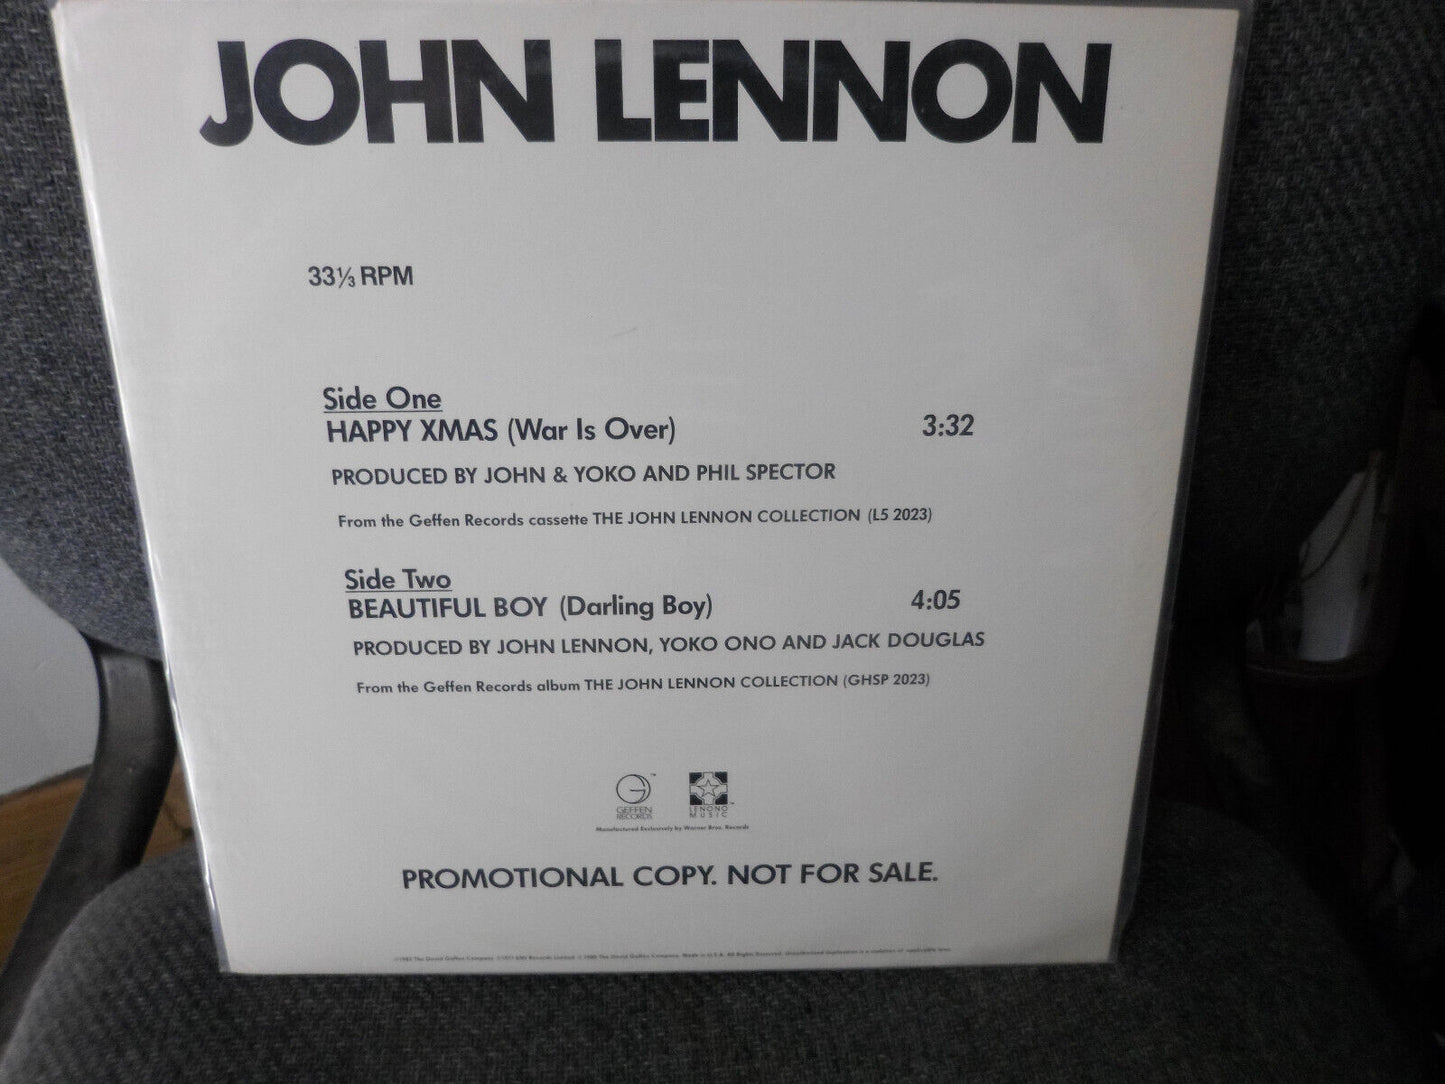 JOHN LENNON-HAPPY XMAS (War Is Over) BEAUTIFUL BOY-Promotional Record